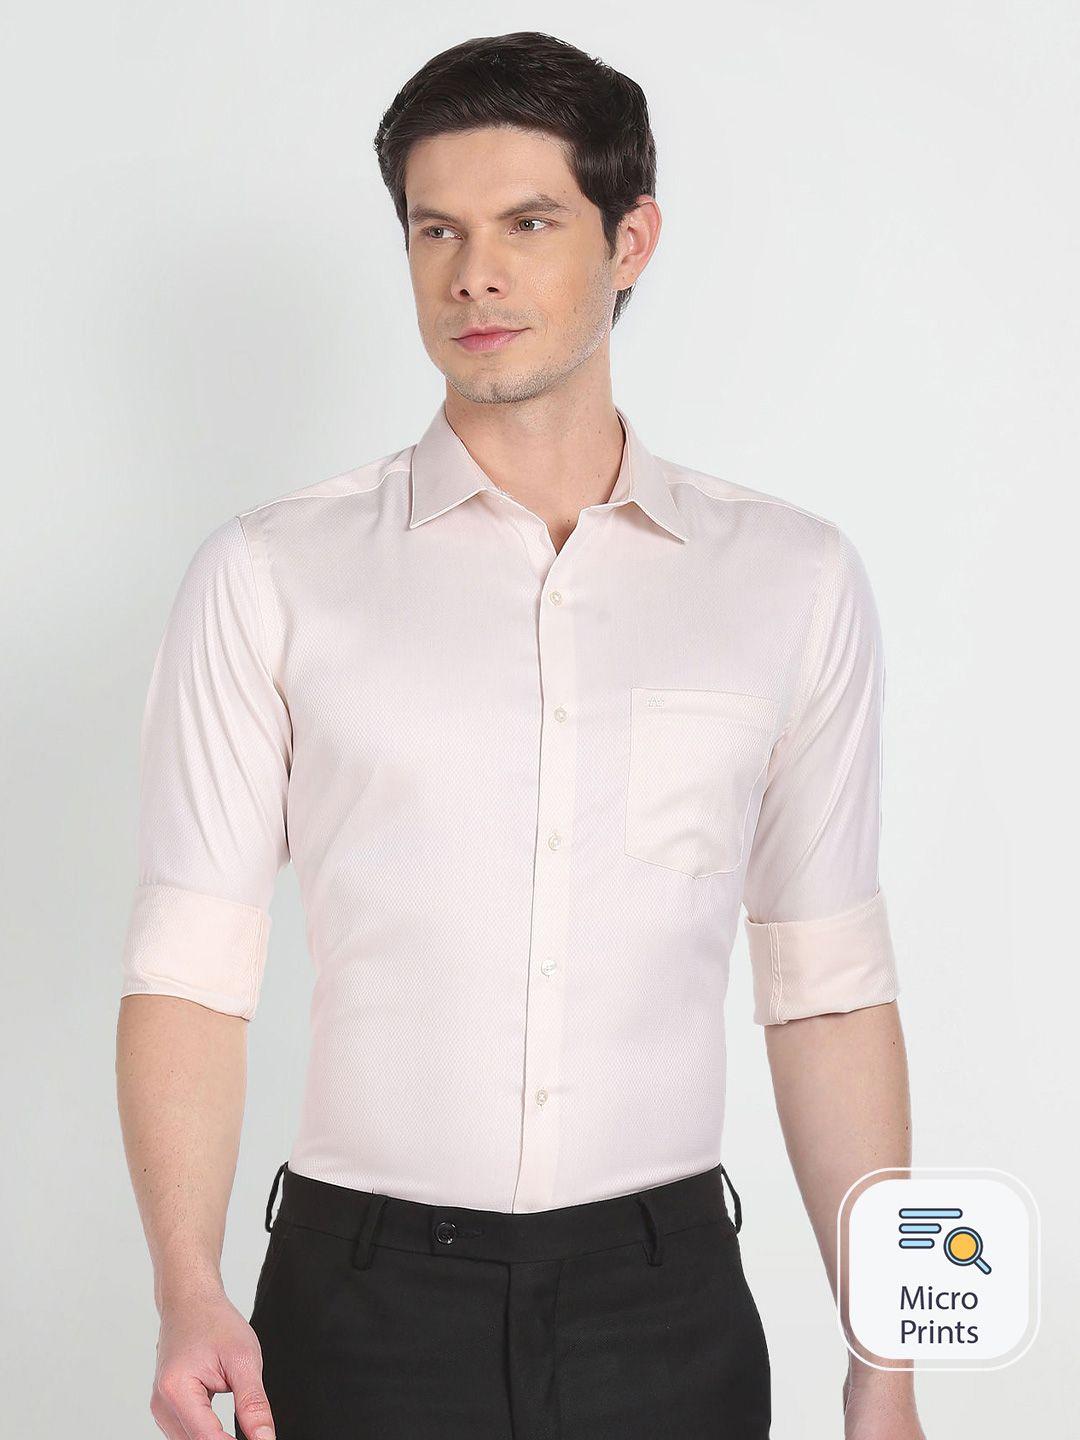 arrow micro print spread collar long sleeve pocket cotton formal shirt